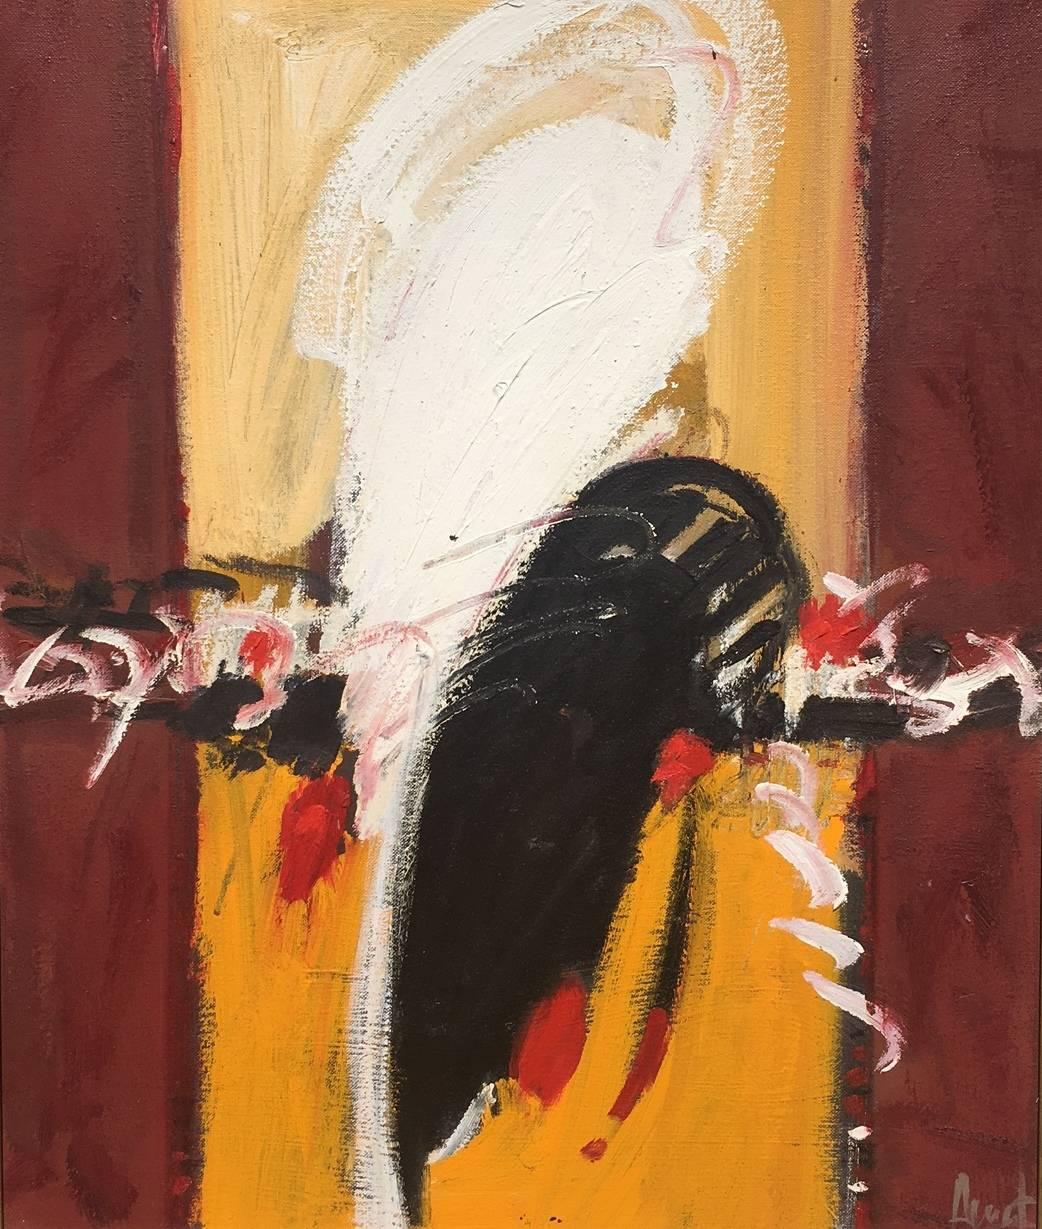  Antoni Amat  VerticaL  Red  yellow  Girona. original abstract mixed media  - Painting by Antonio Amat